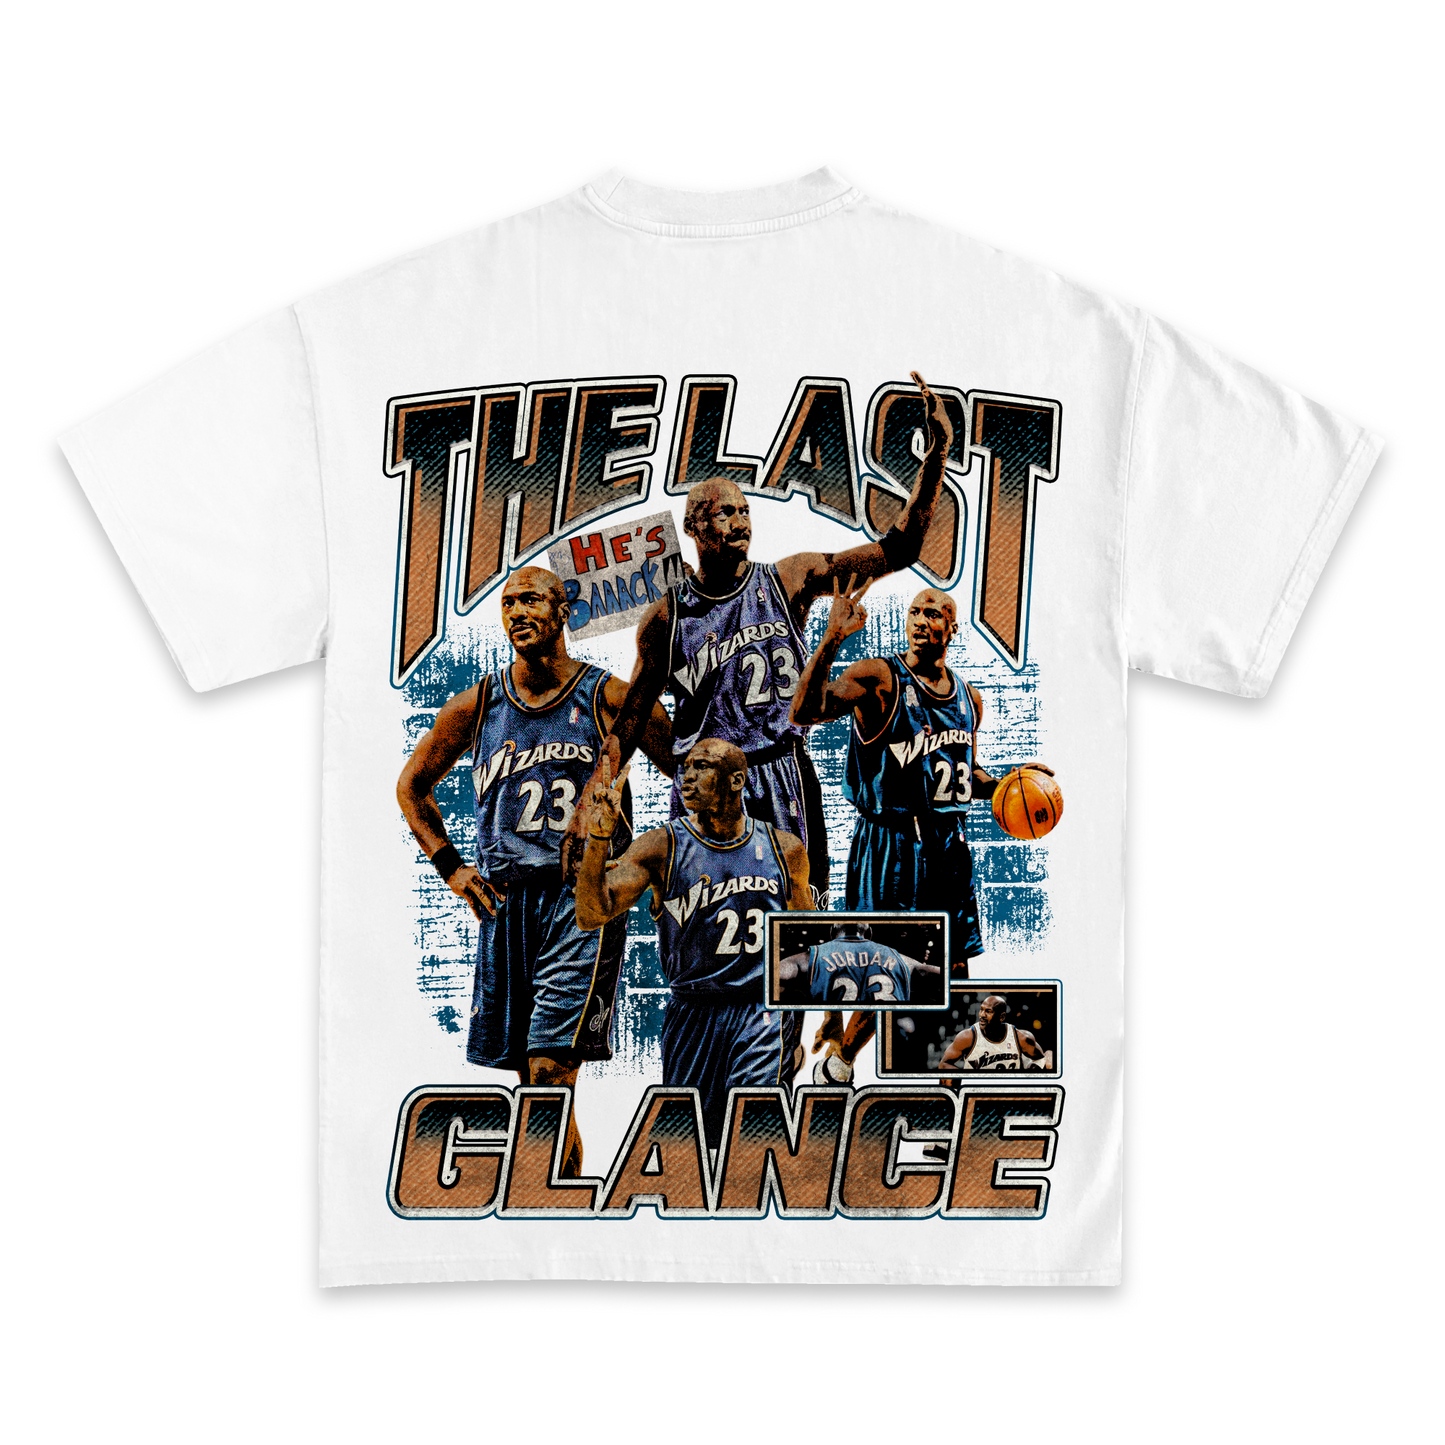 Michael Jordan "The Final Chapter" Graphic T-Shirt